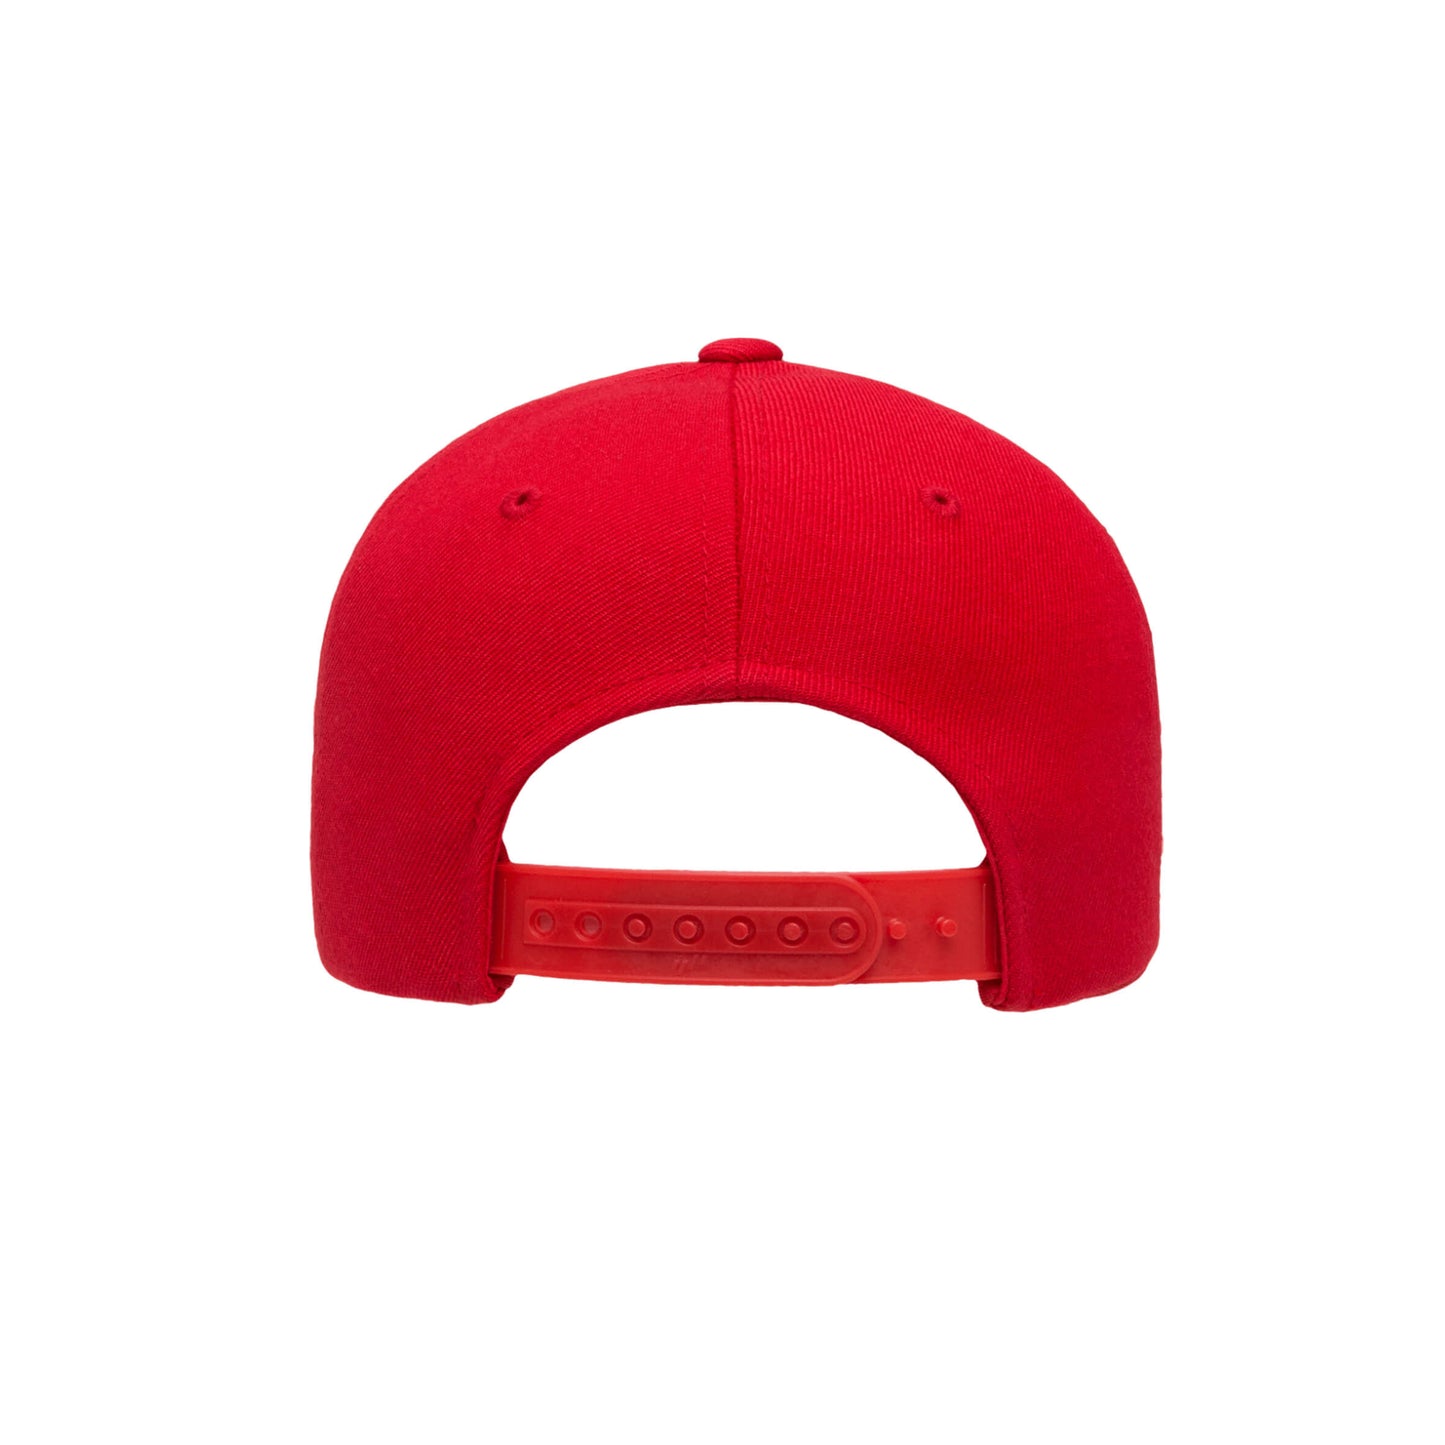 6789C-RED Curve Peak Snapback Red Cap Adjustable Fit